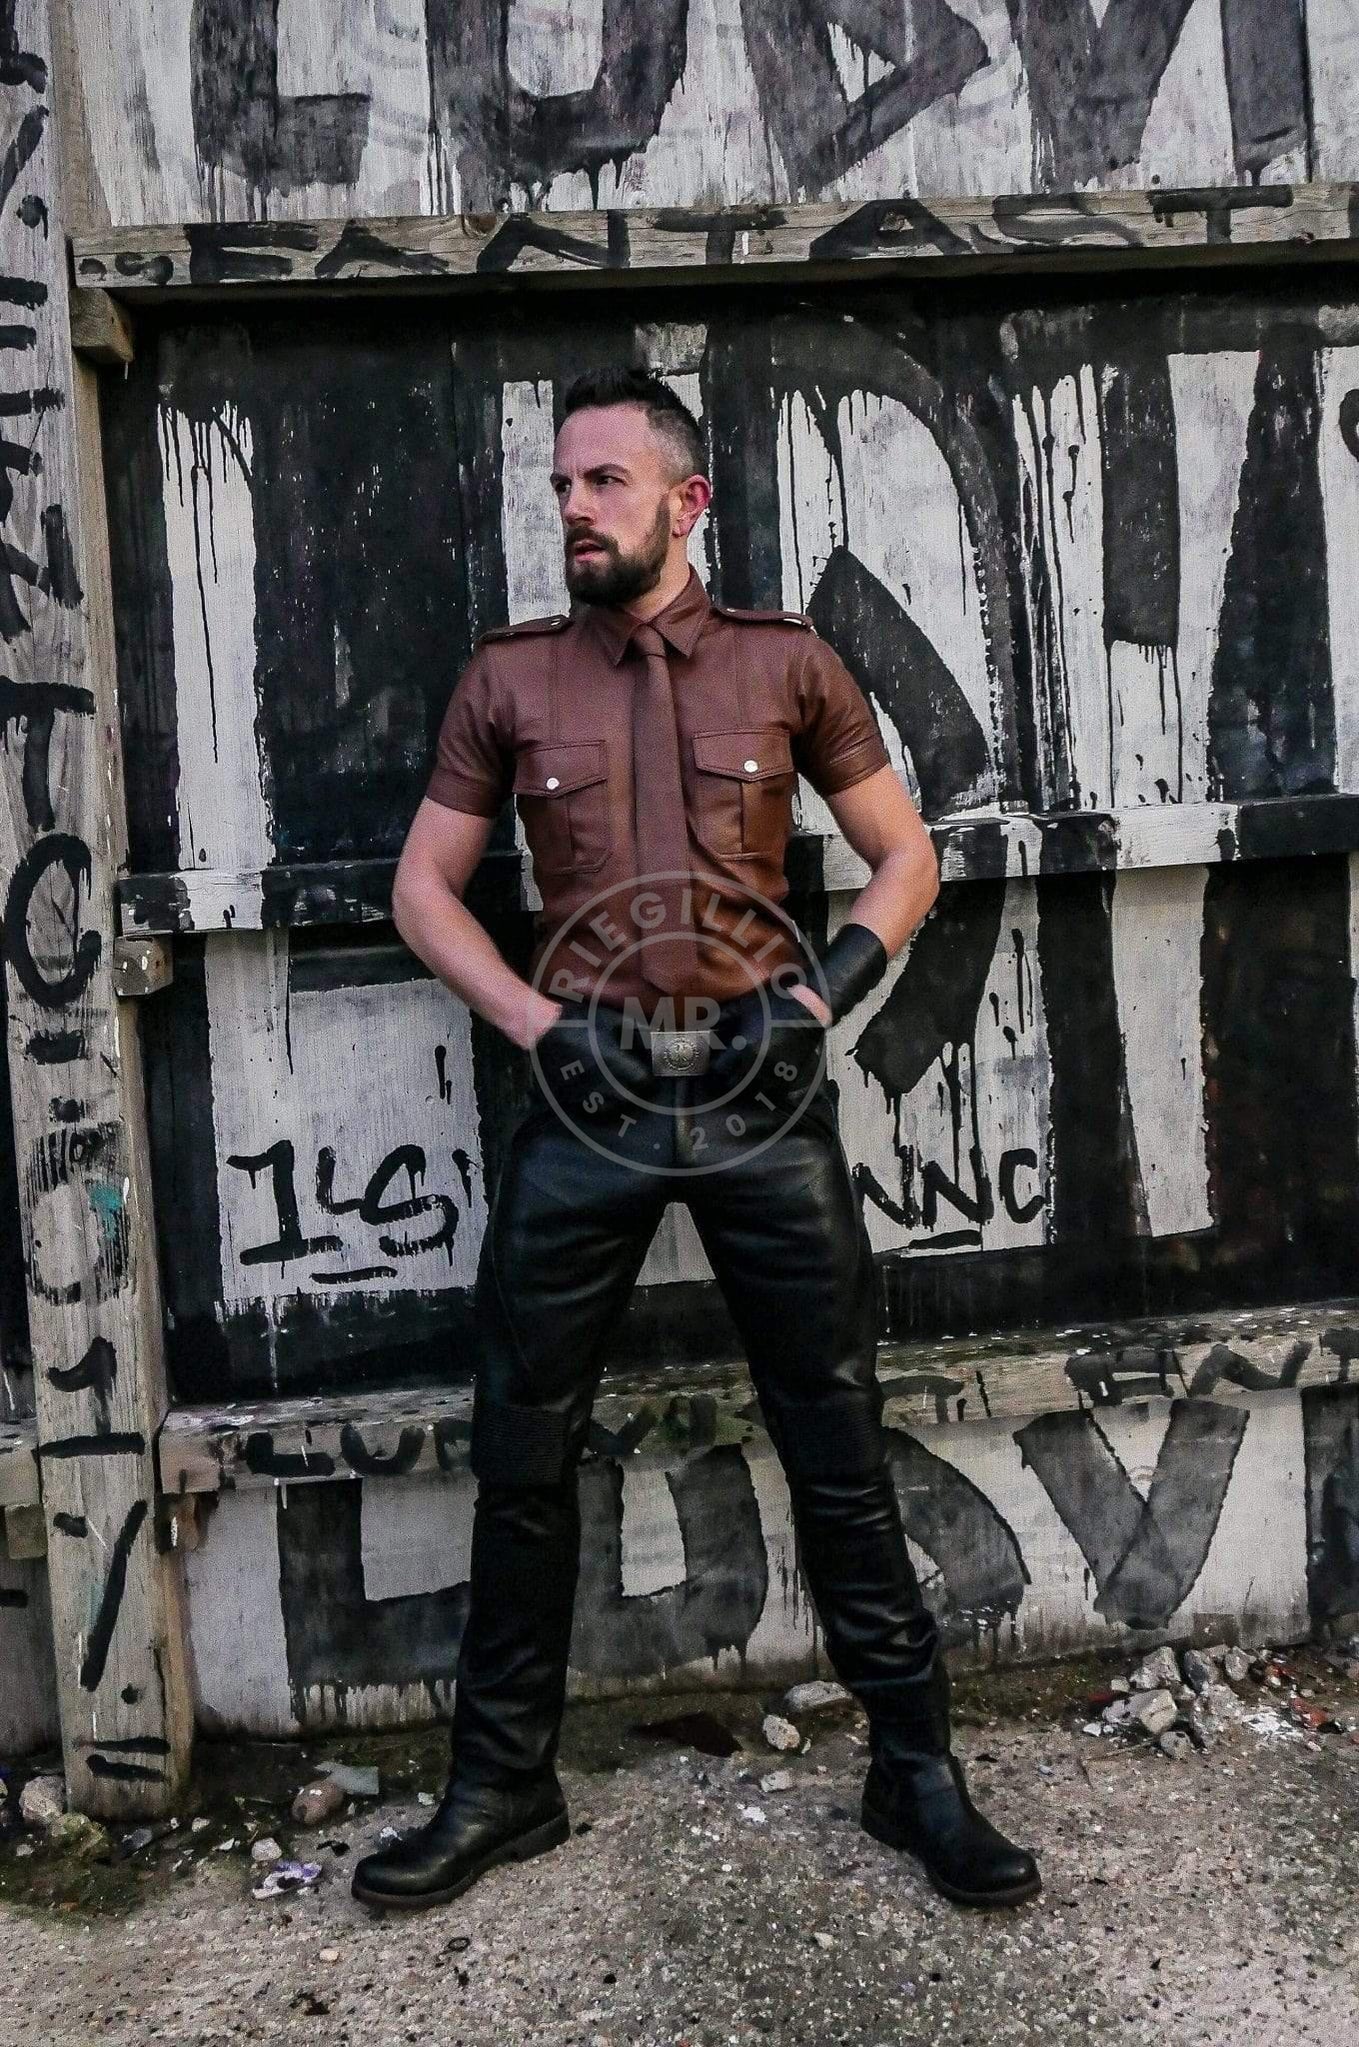 Cinnamon Brown Leather Shirt at MR. Riegillio